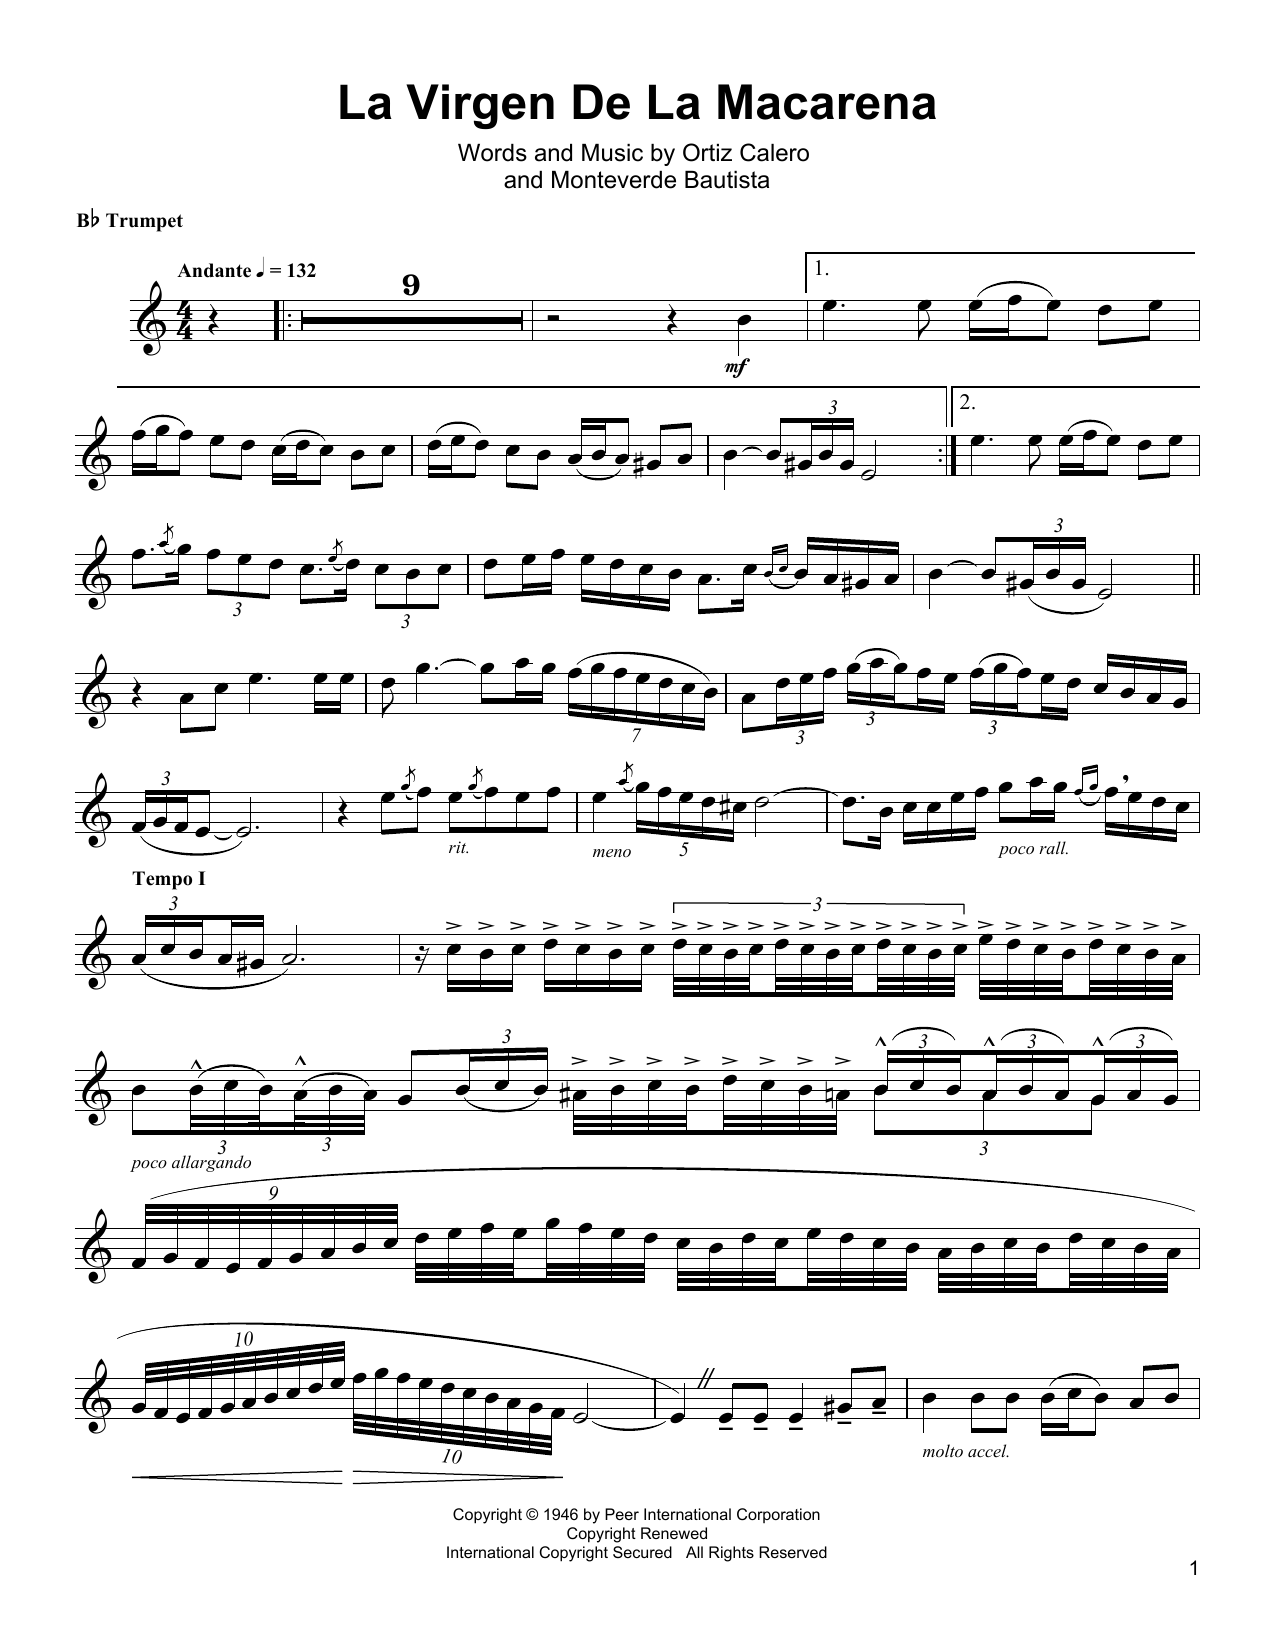 Arturo Sandoval La Virgen De La Macarena Sheet Music Notes & Chords for Trumpet Transcription - Download or Print PDF